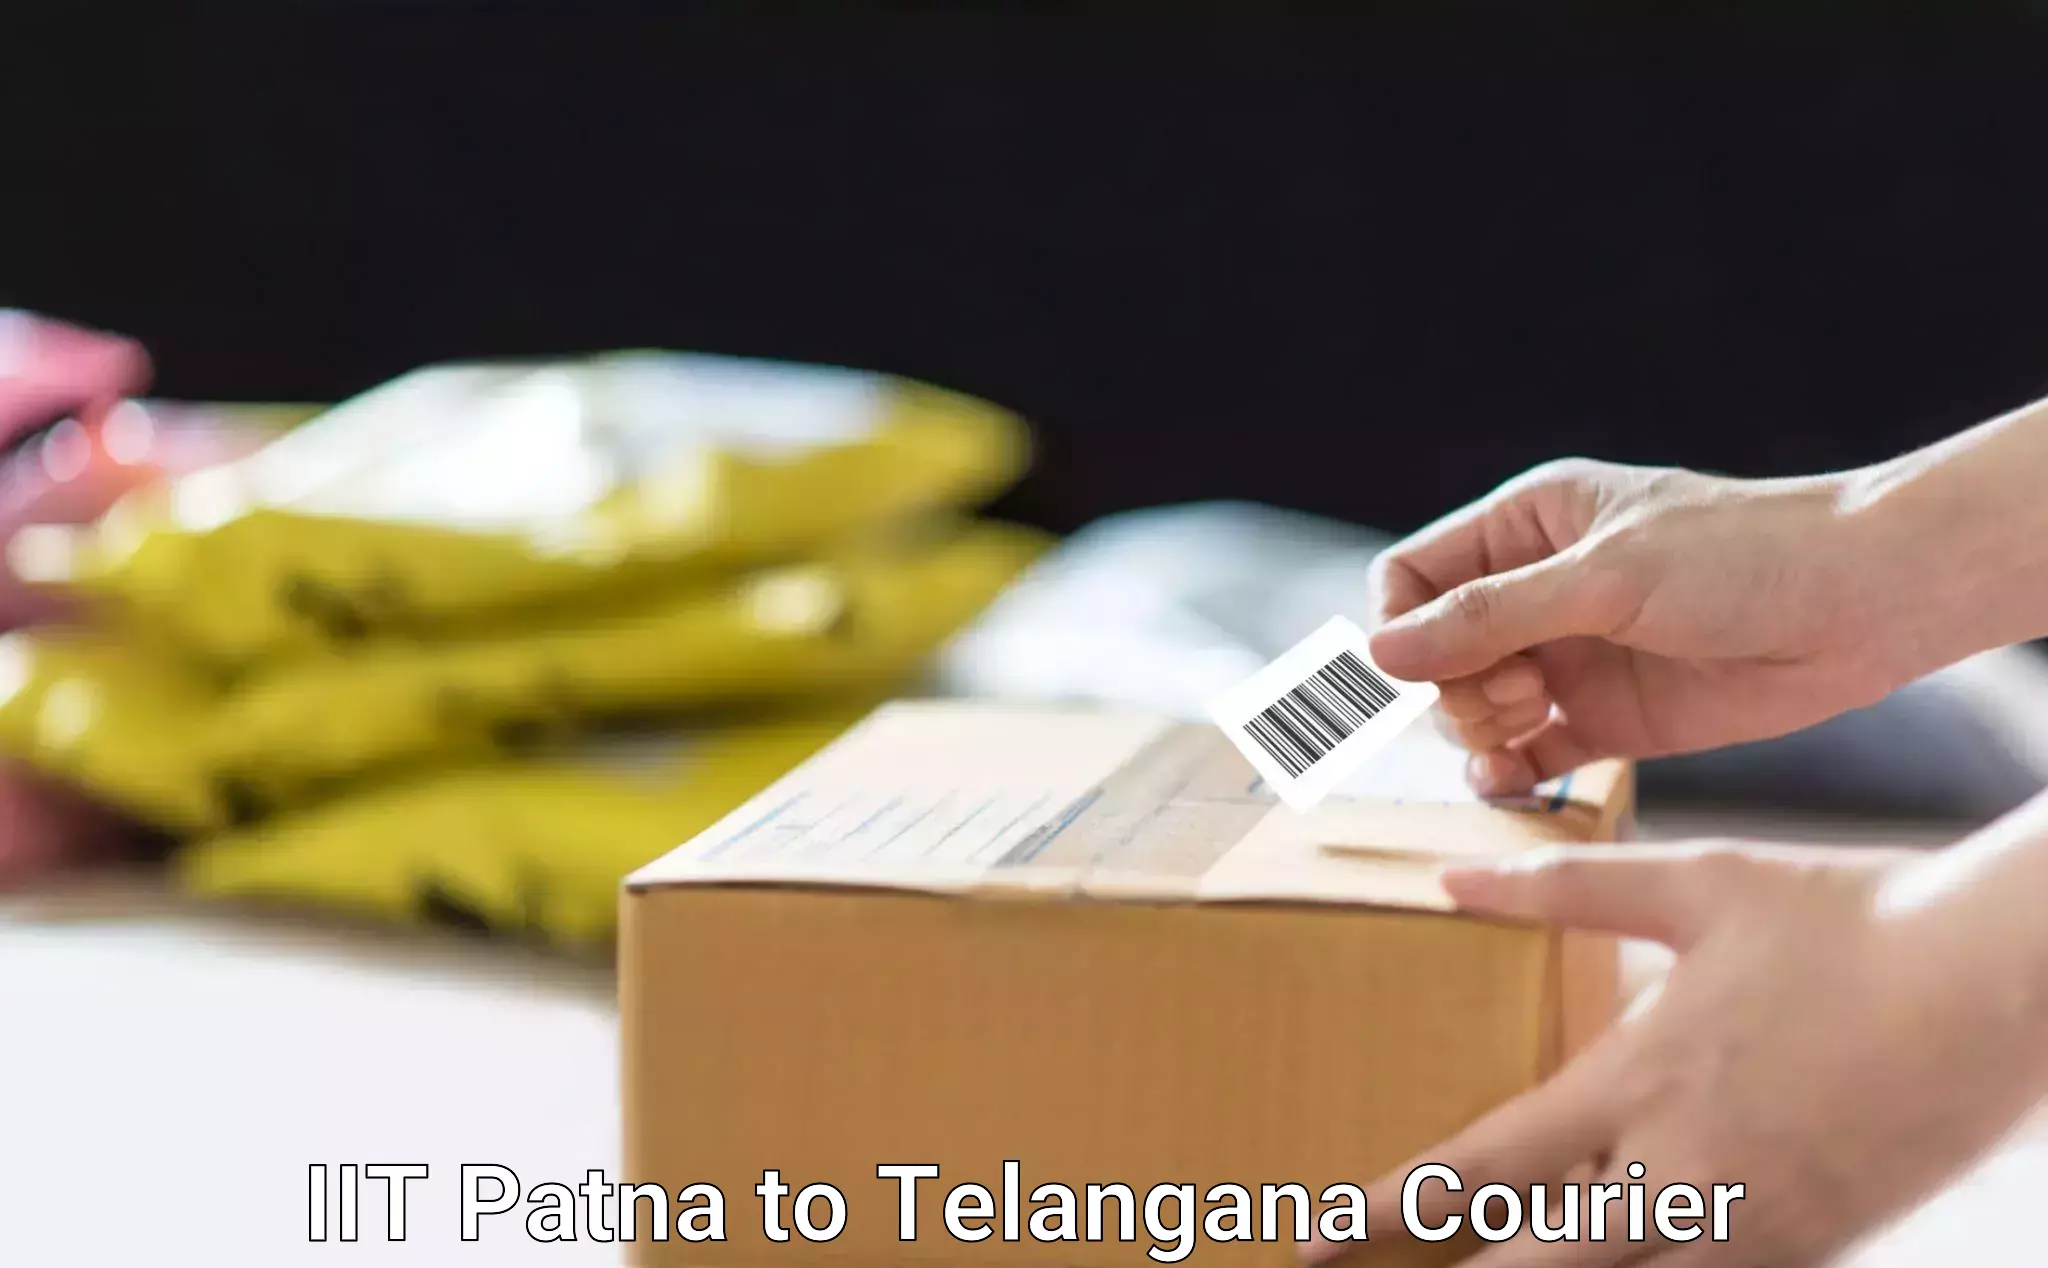 Expert packing and moving IIT Patna to Netrang